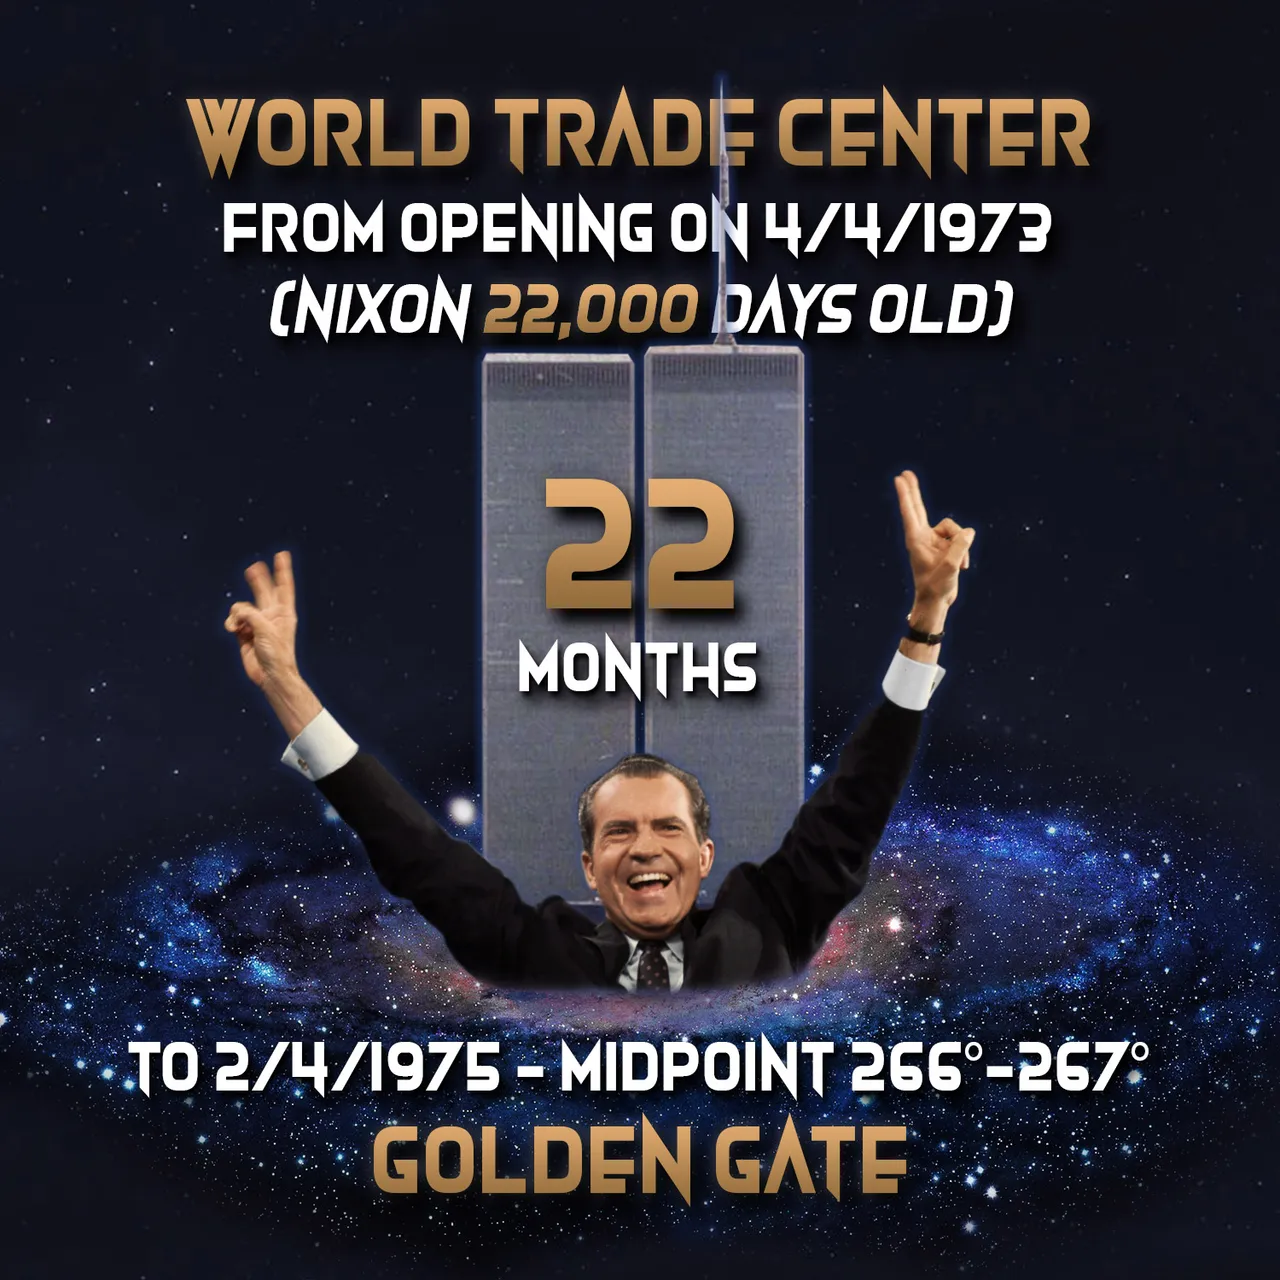 APX World Trade Center Golden Gate Midpoint 266267 Richard Nixon 22.jpg